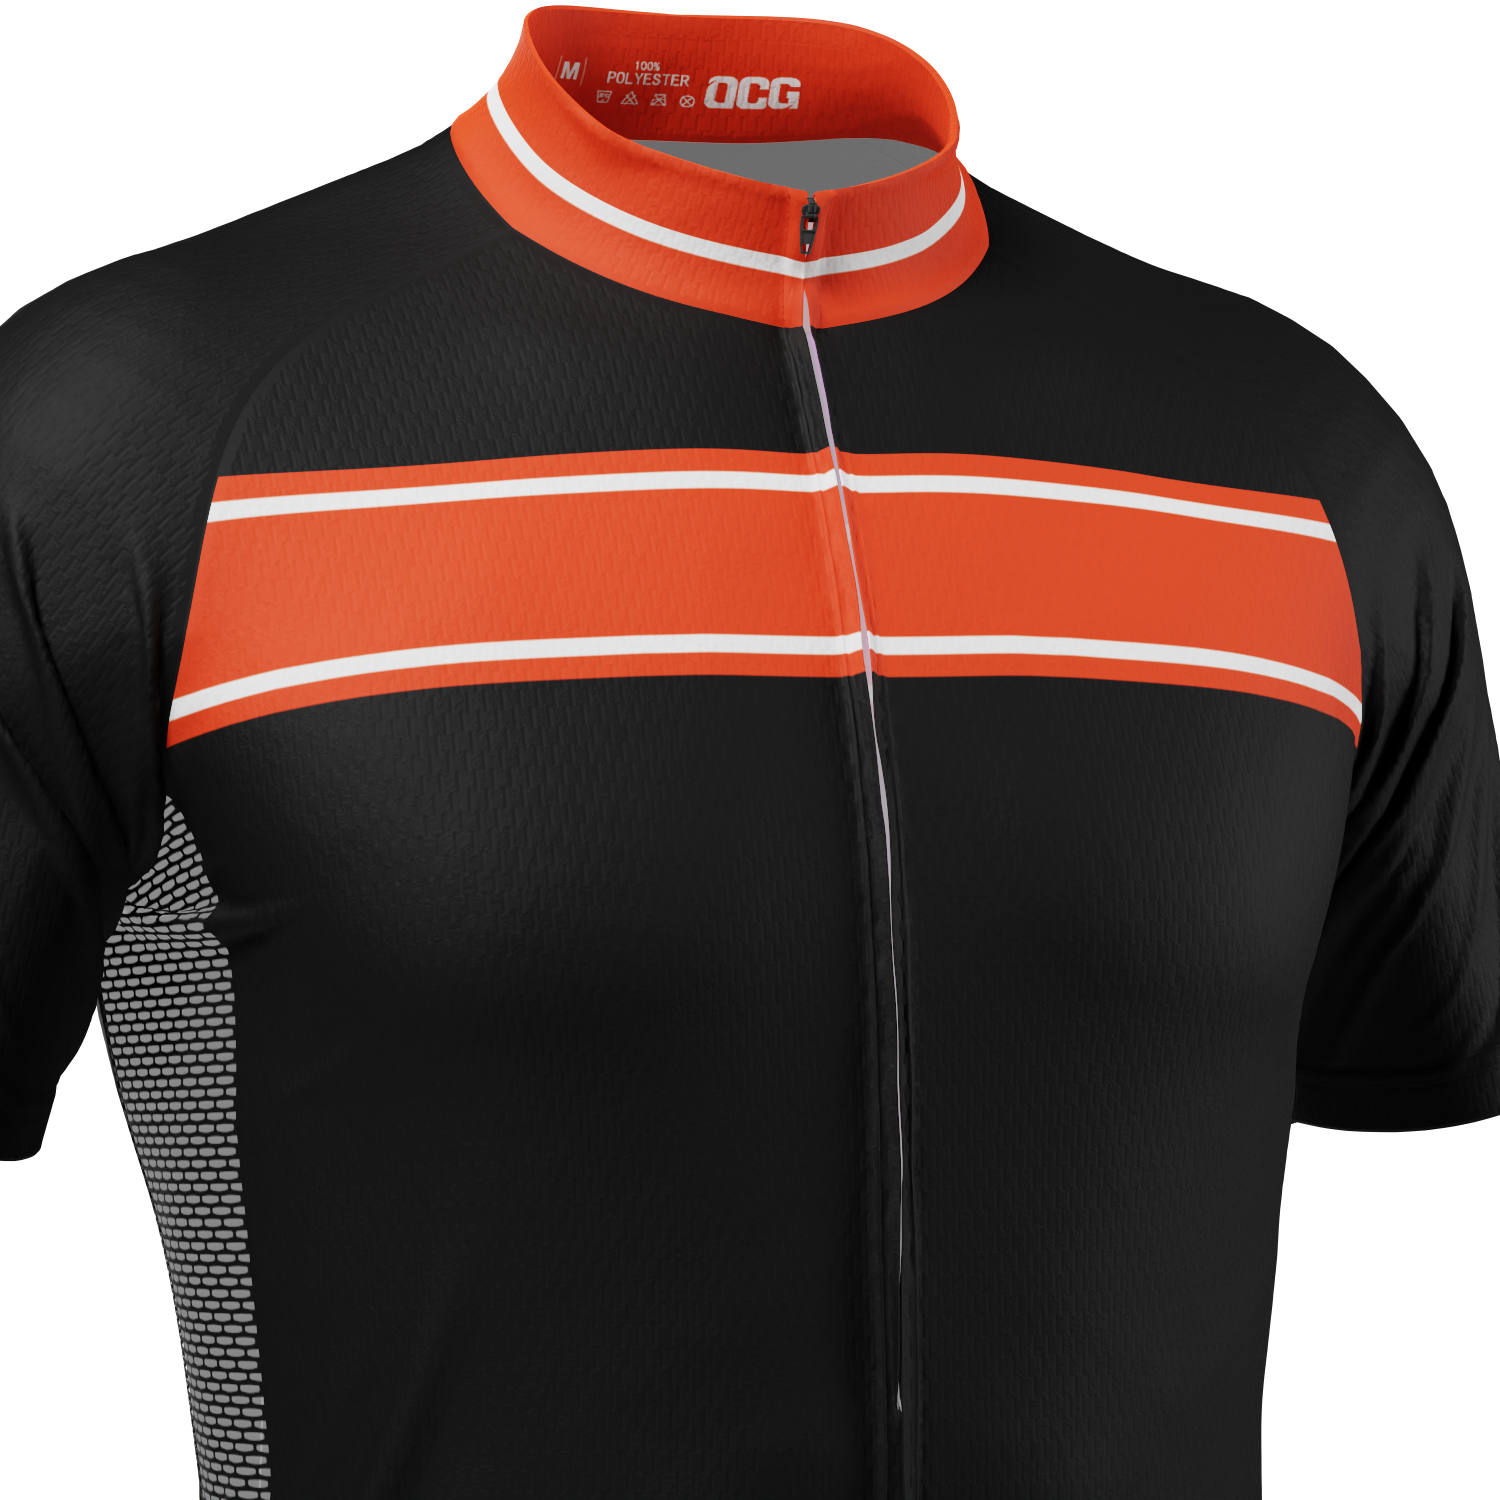 Red Stripe Black Cycling Jersey